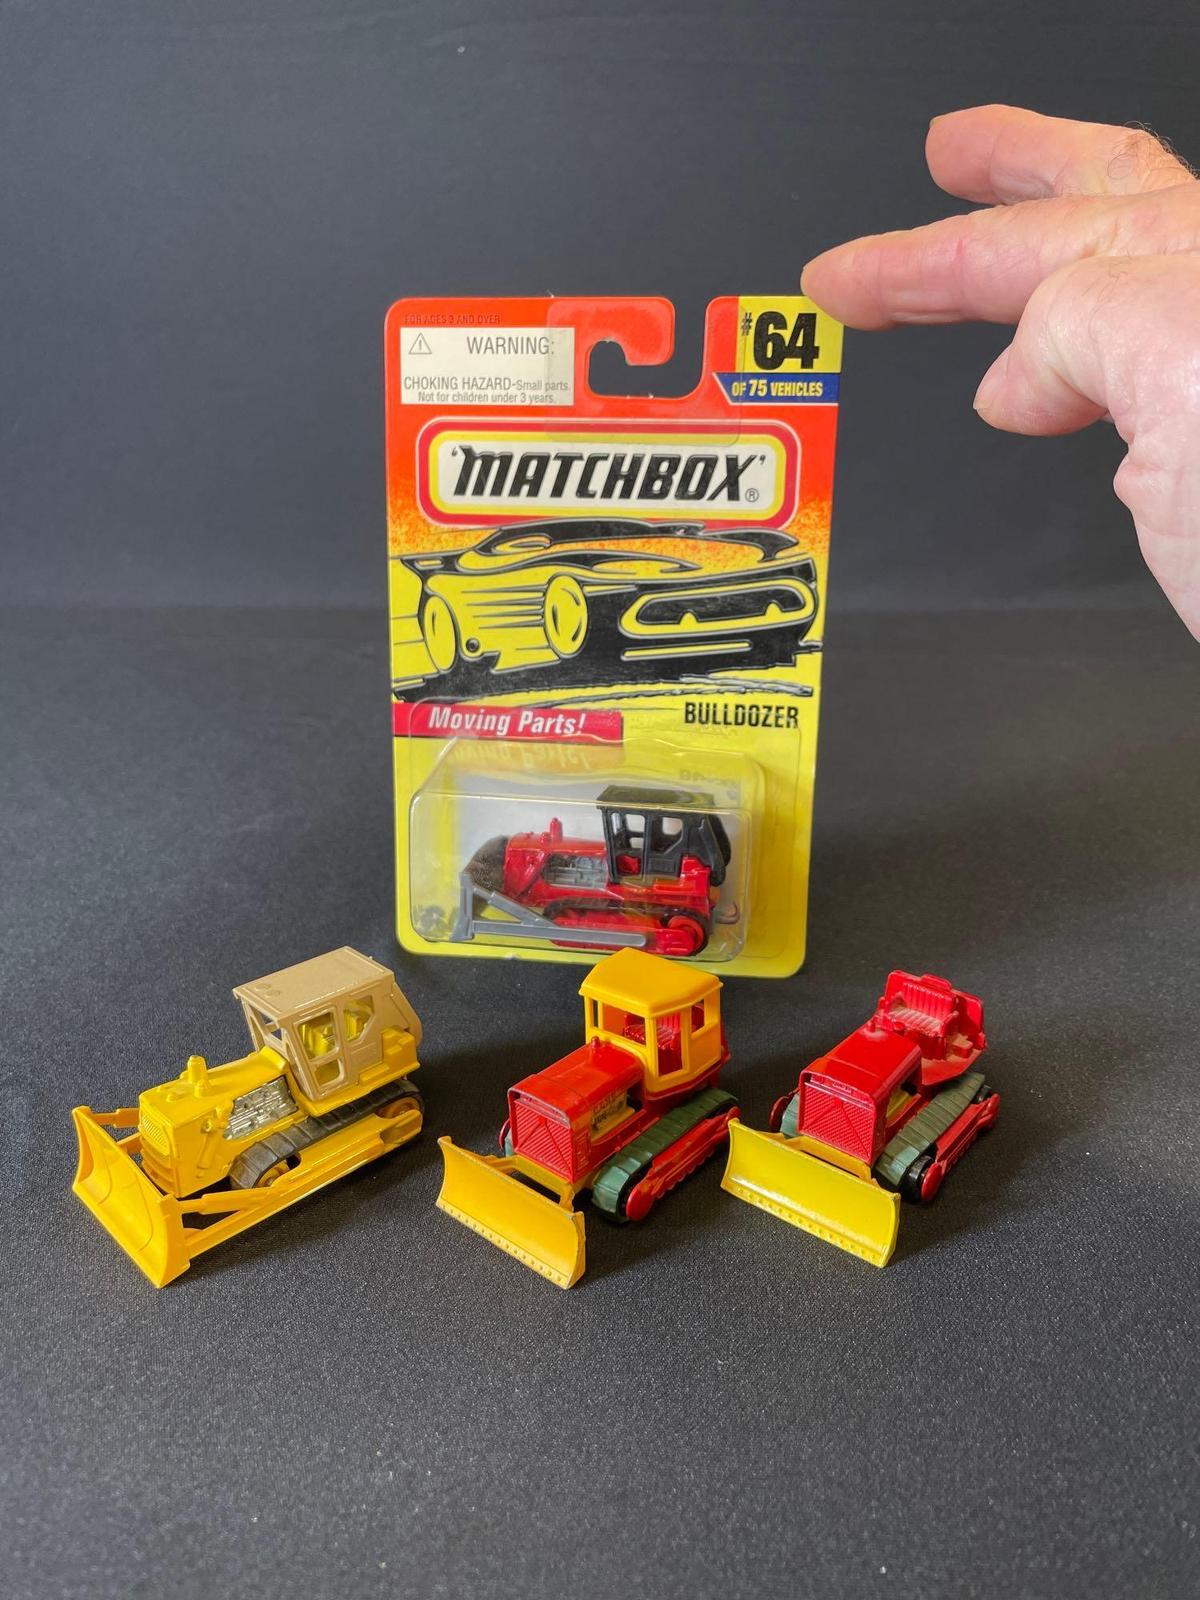 (4) Vintage Matchbox bulldozer